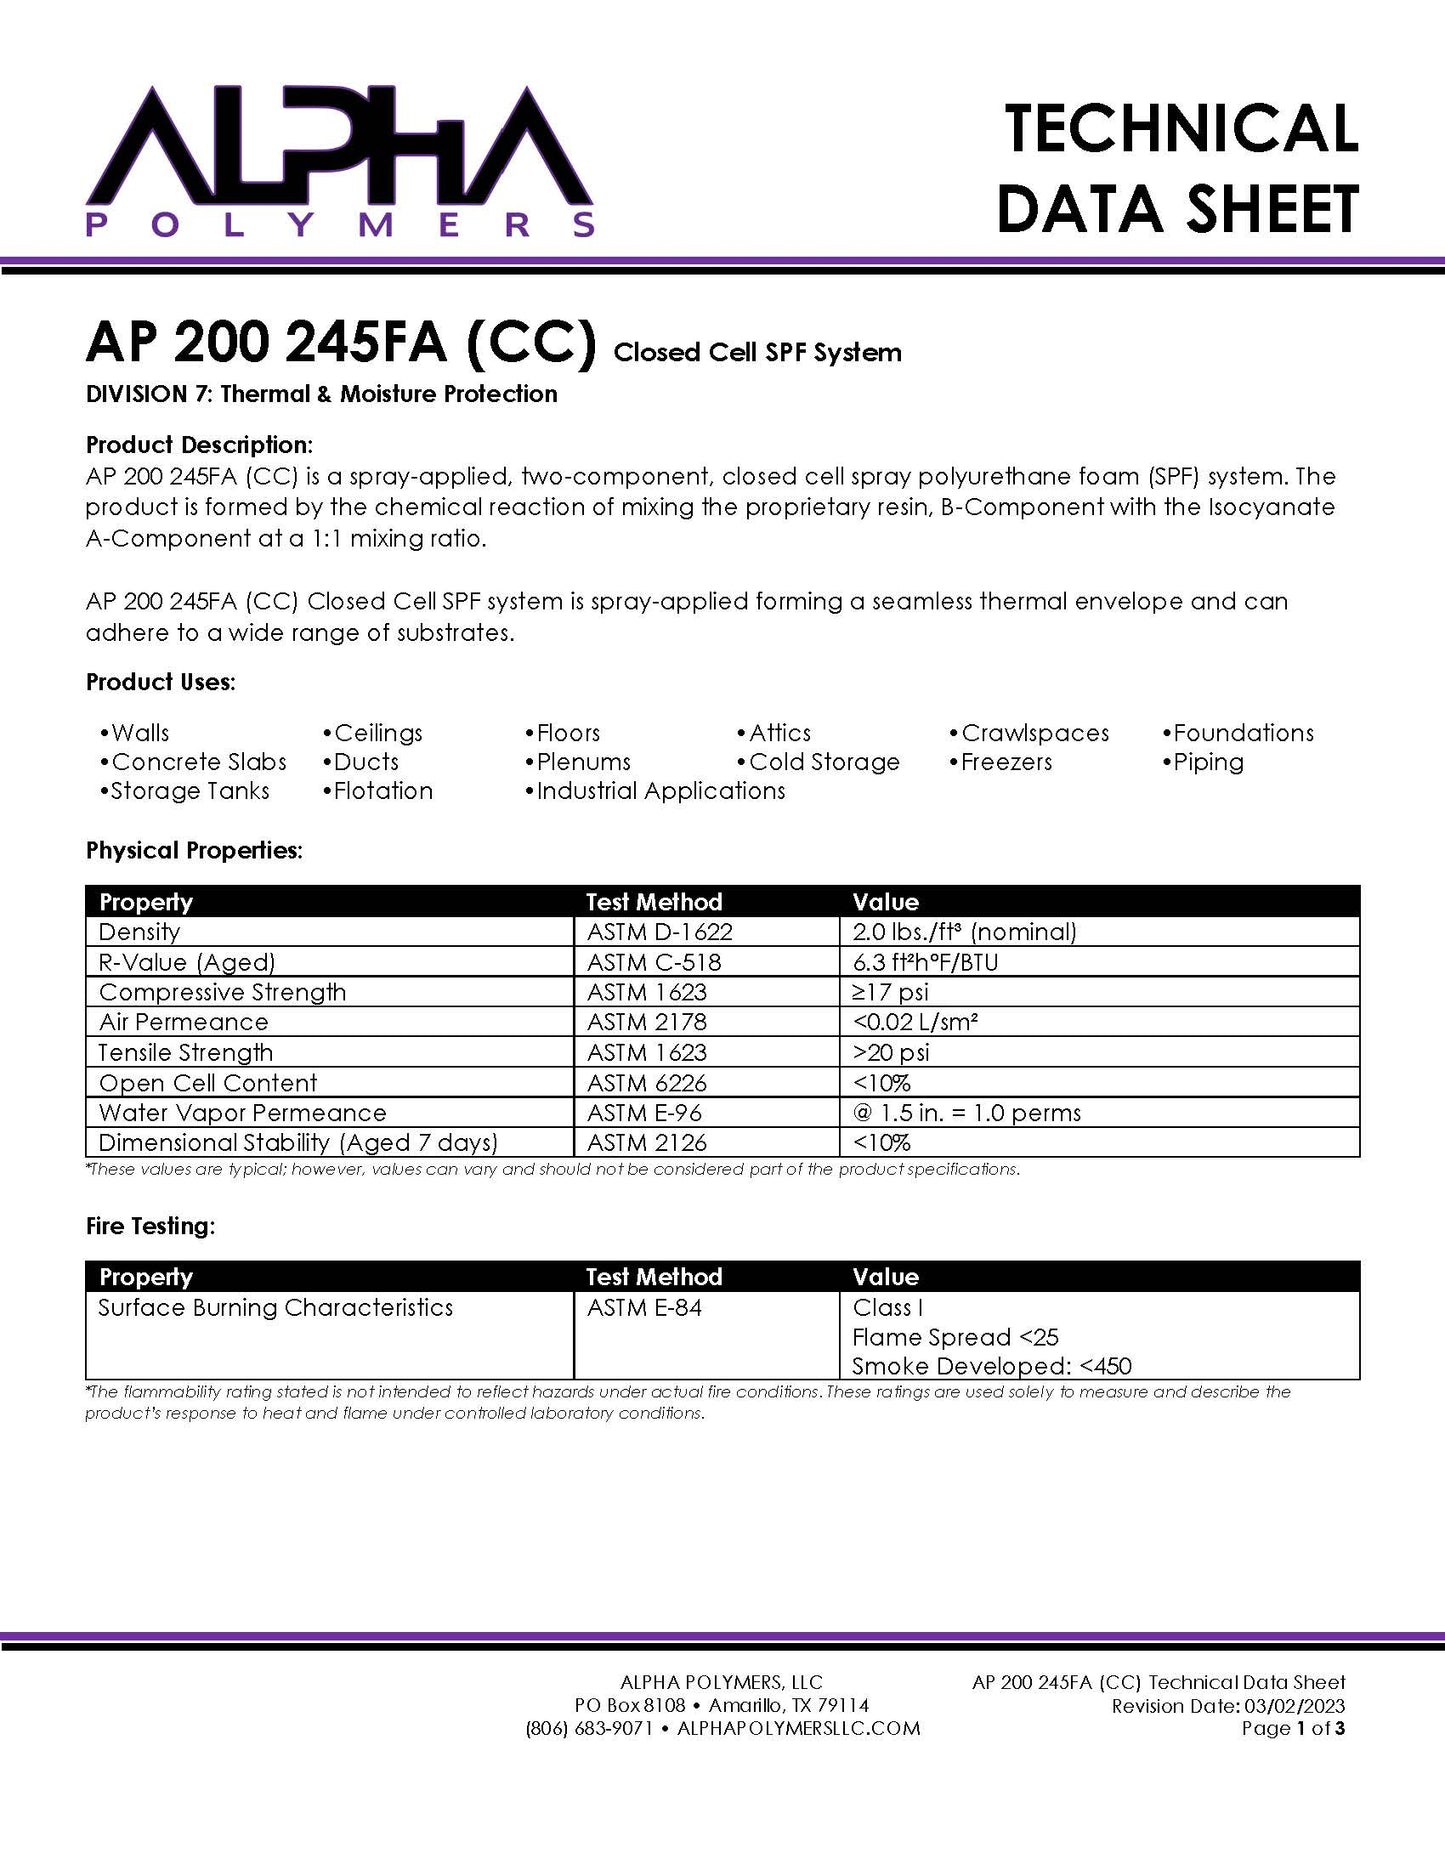 Closed Cell Spray Foam Resin AP 200 245FA (CC)